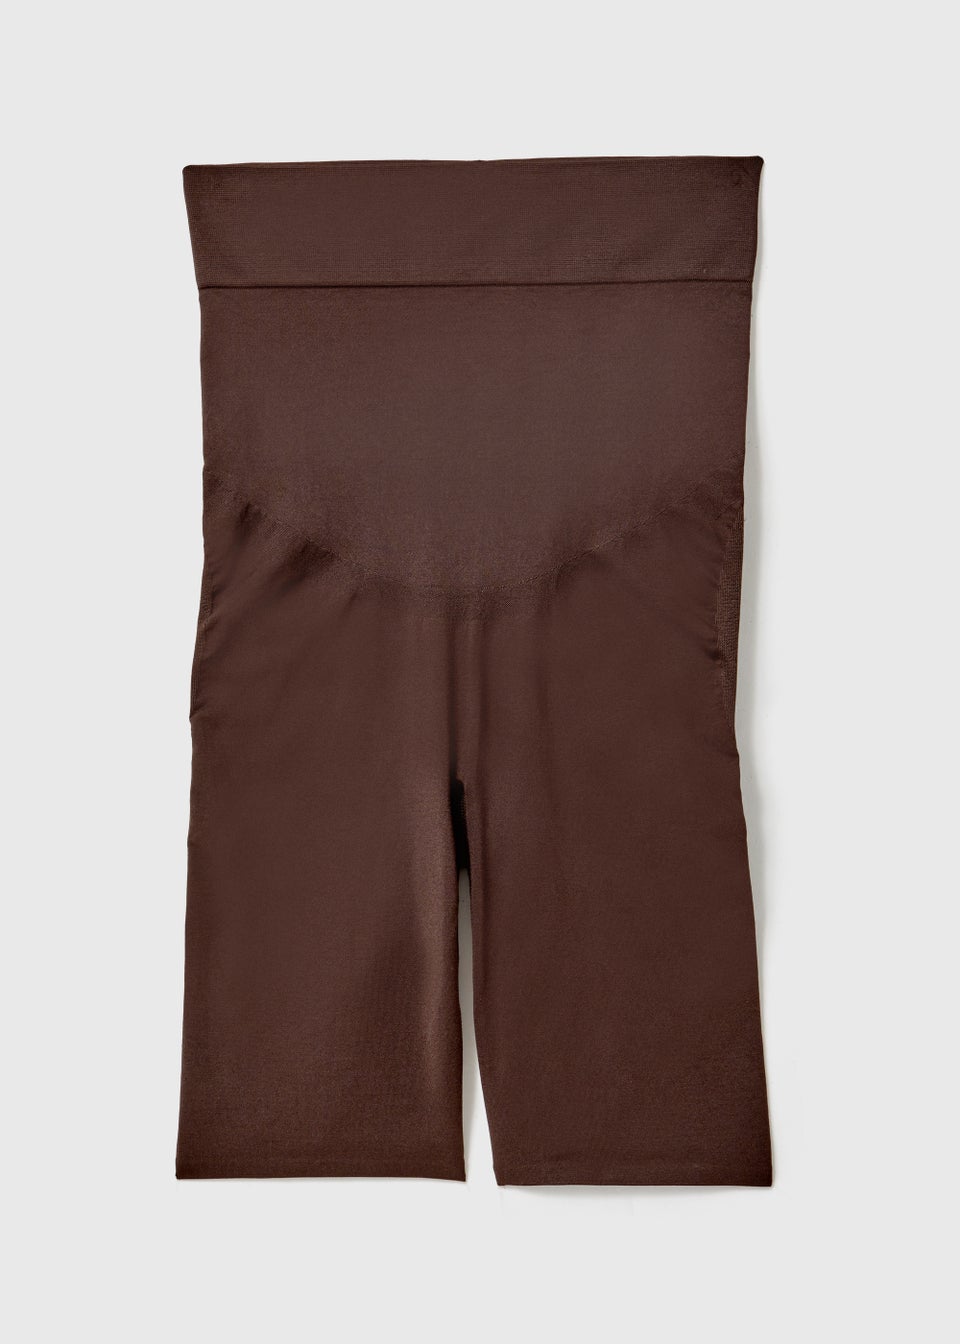 Brown Seamless Smoothing Shorts